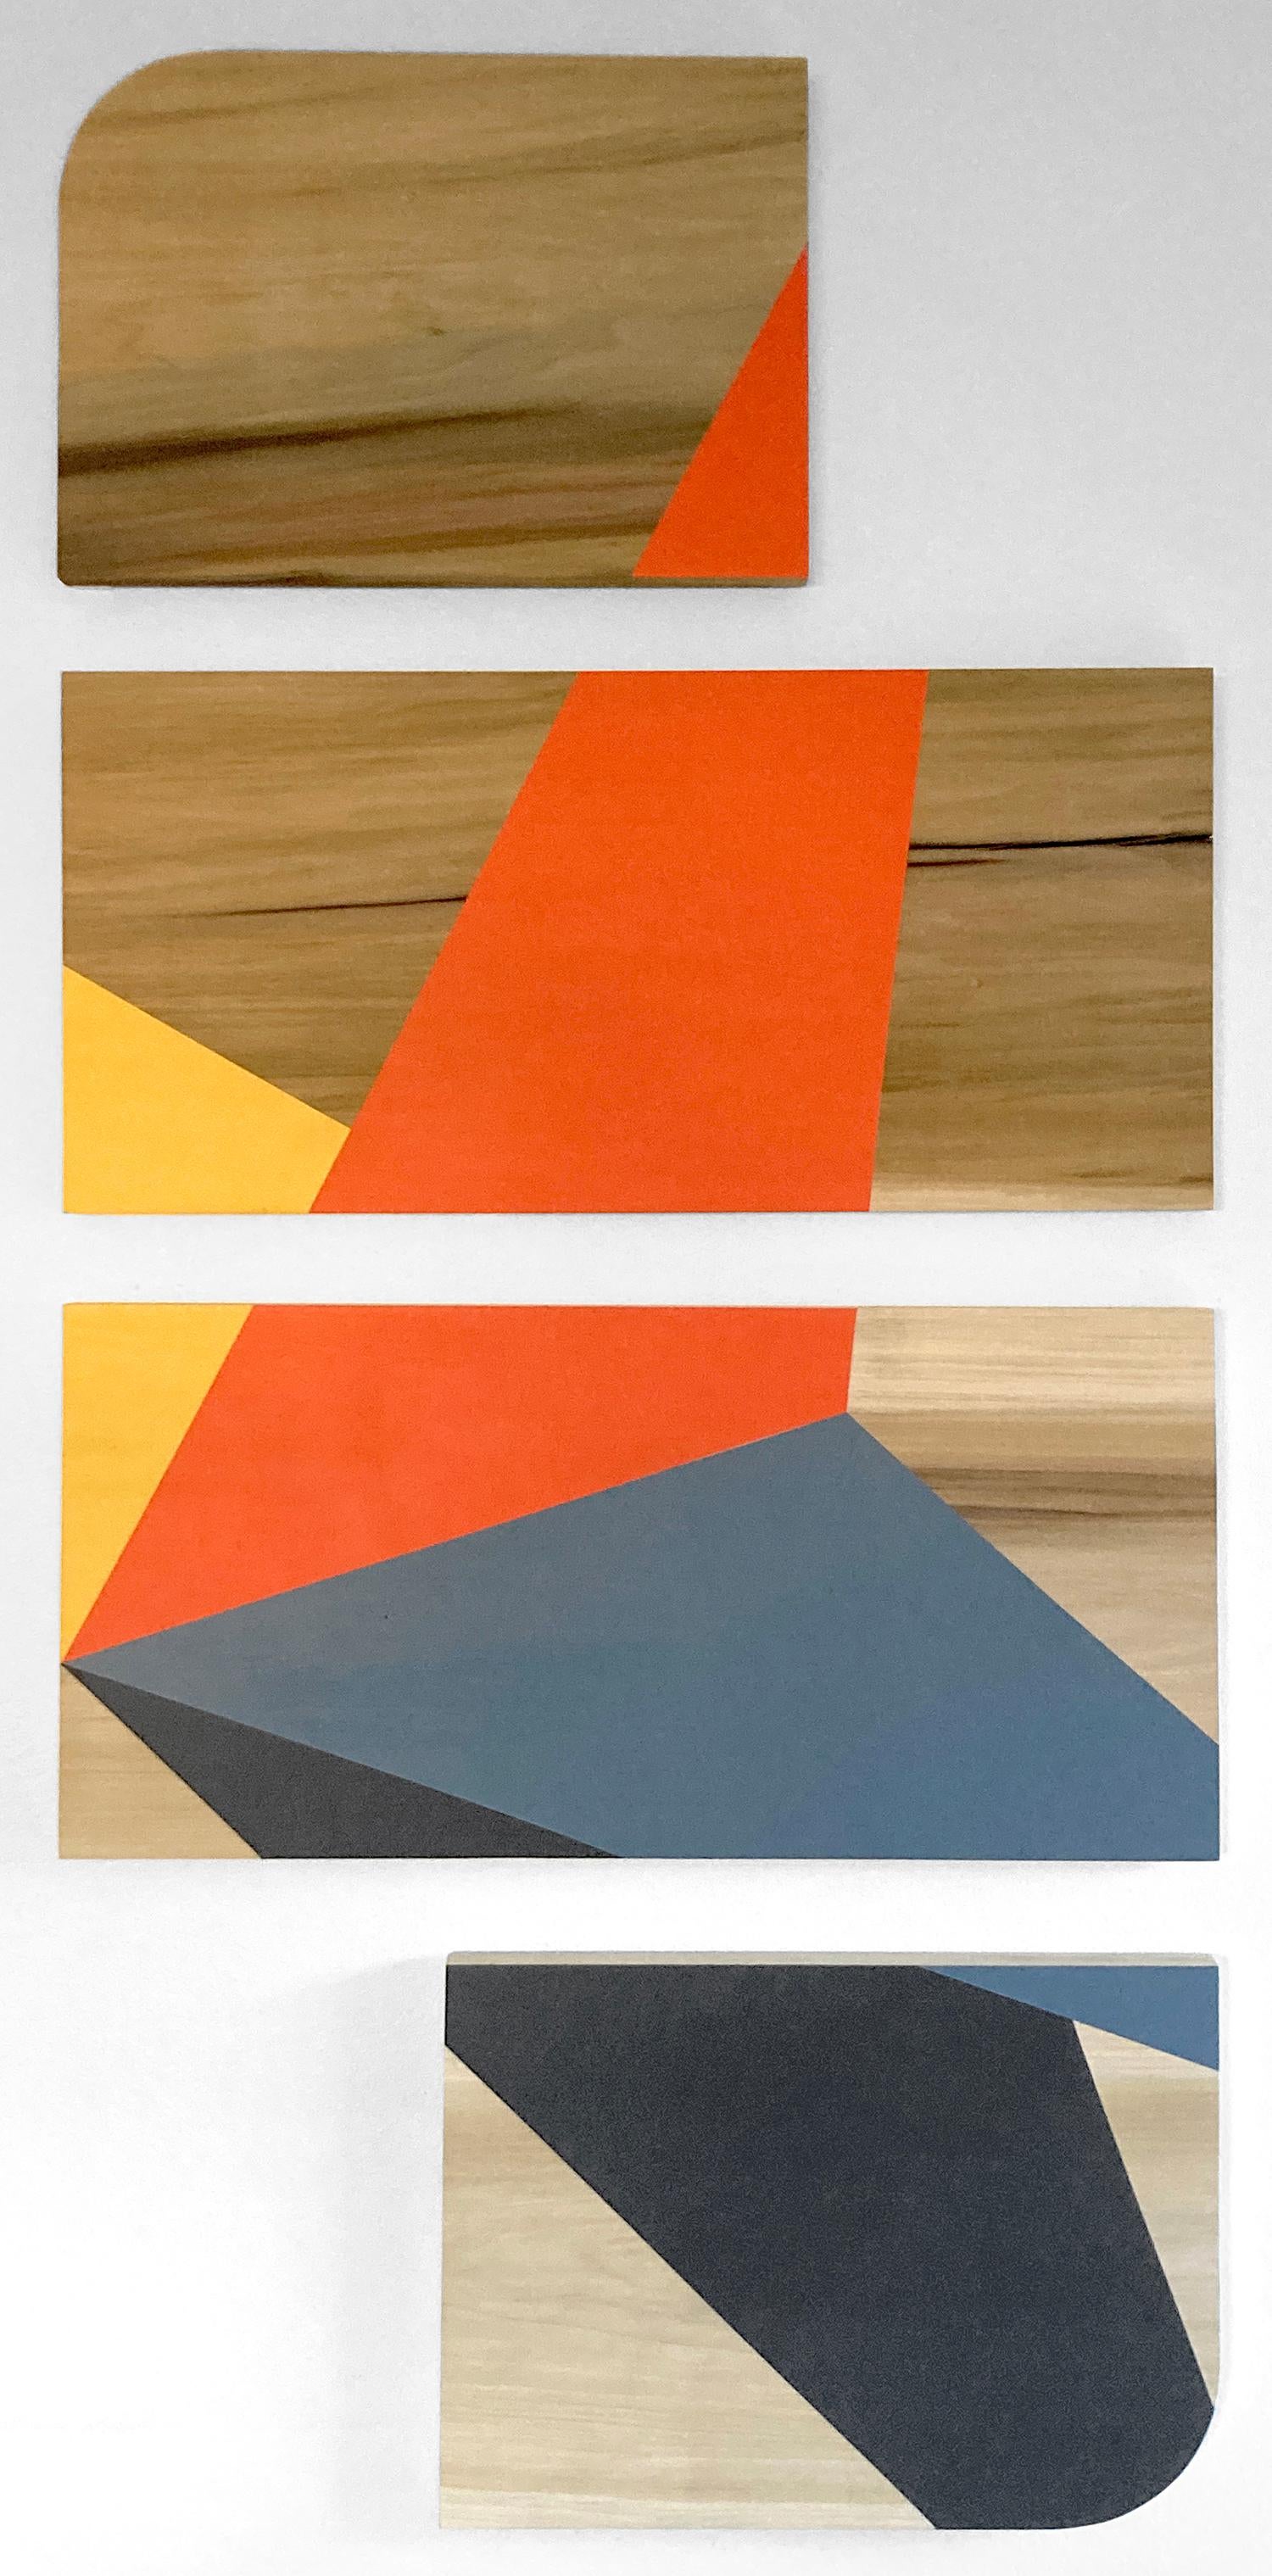 'Revolution' colorful minimalist work on panel, wood grain, Carmen Herrera